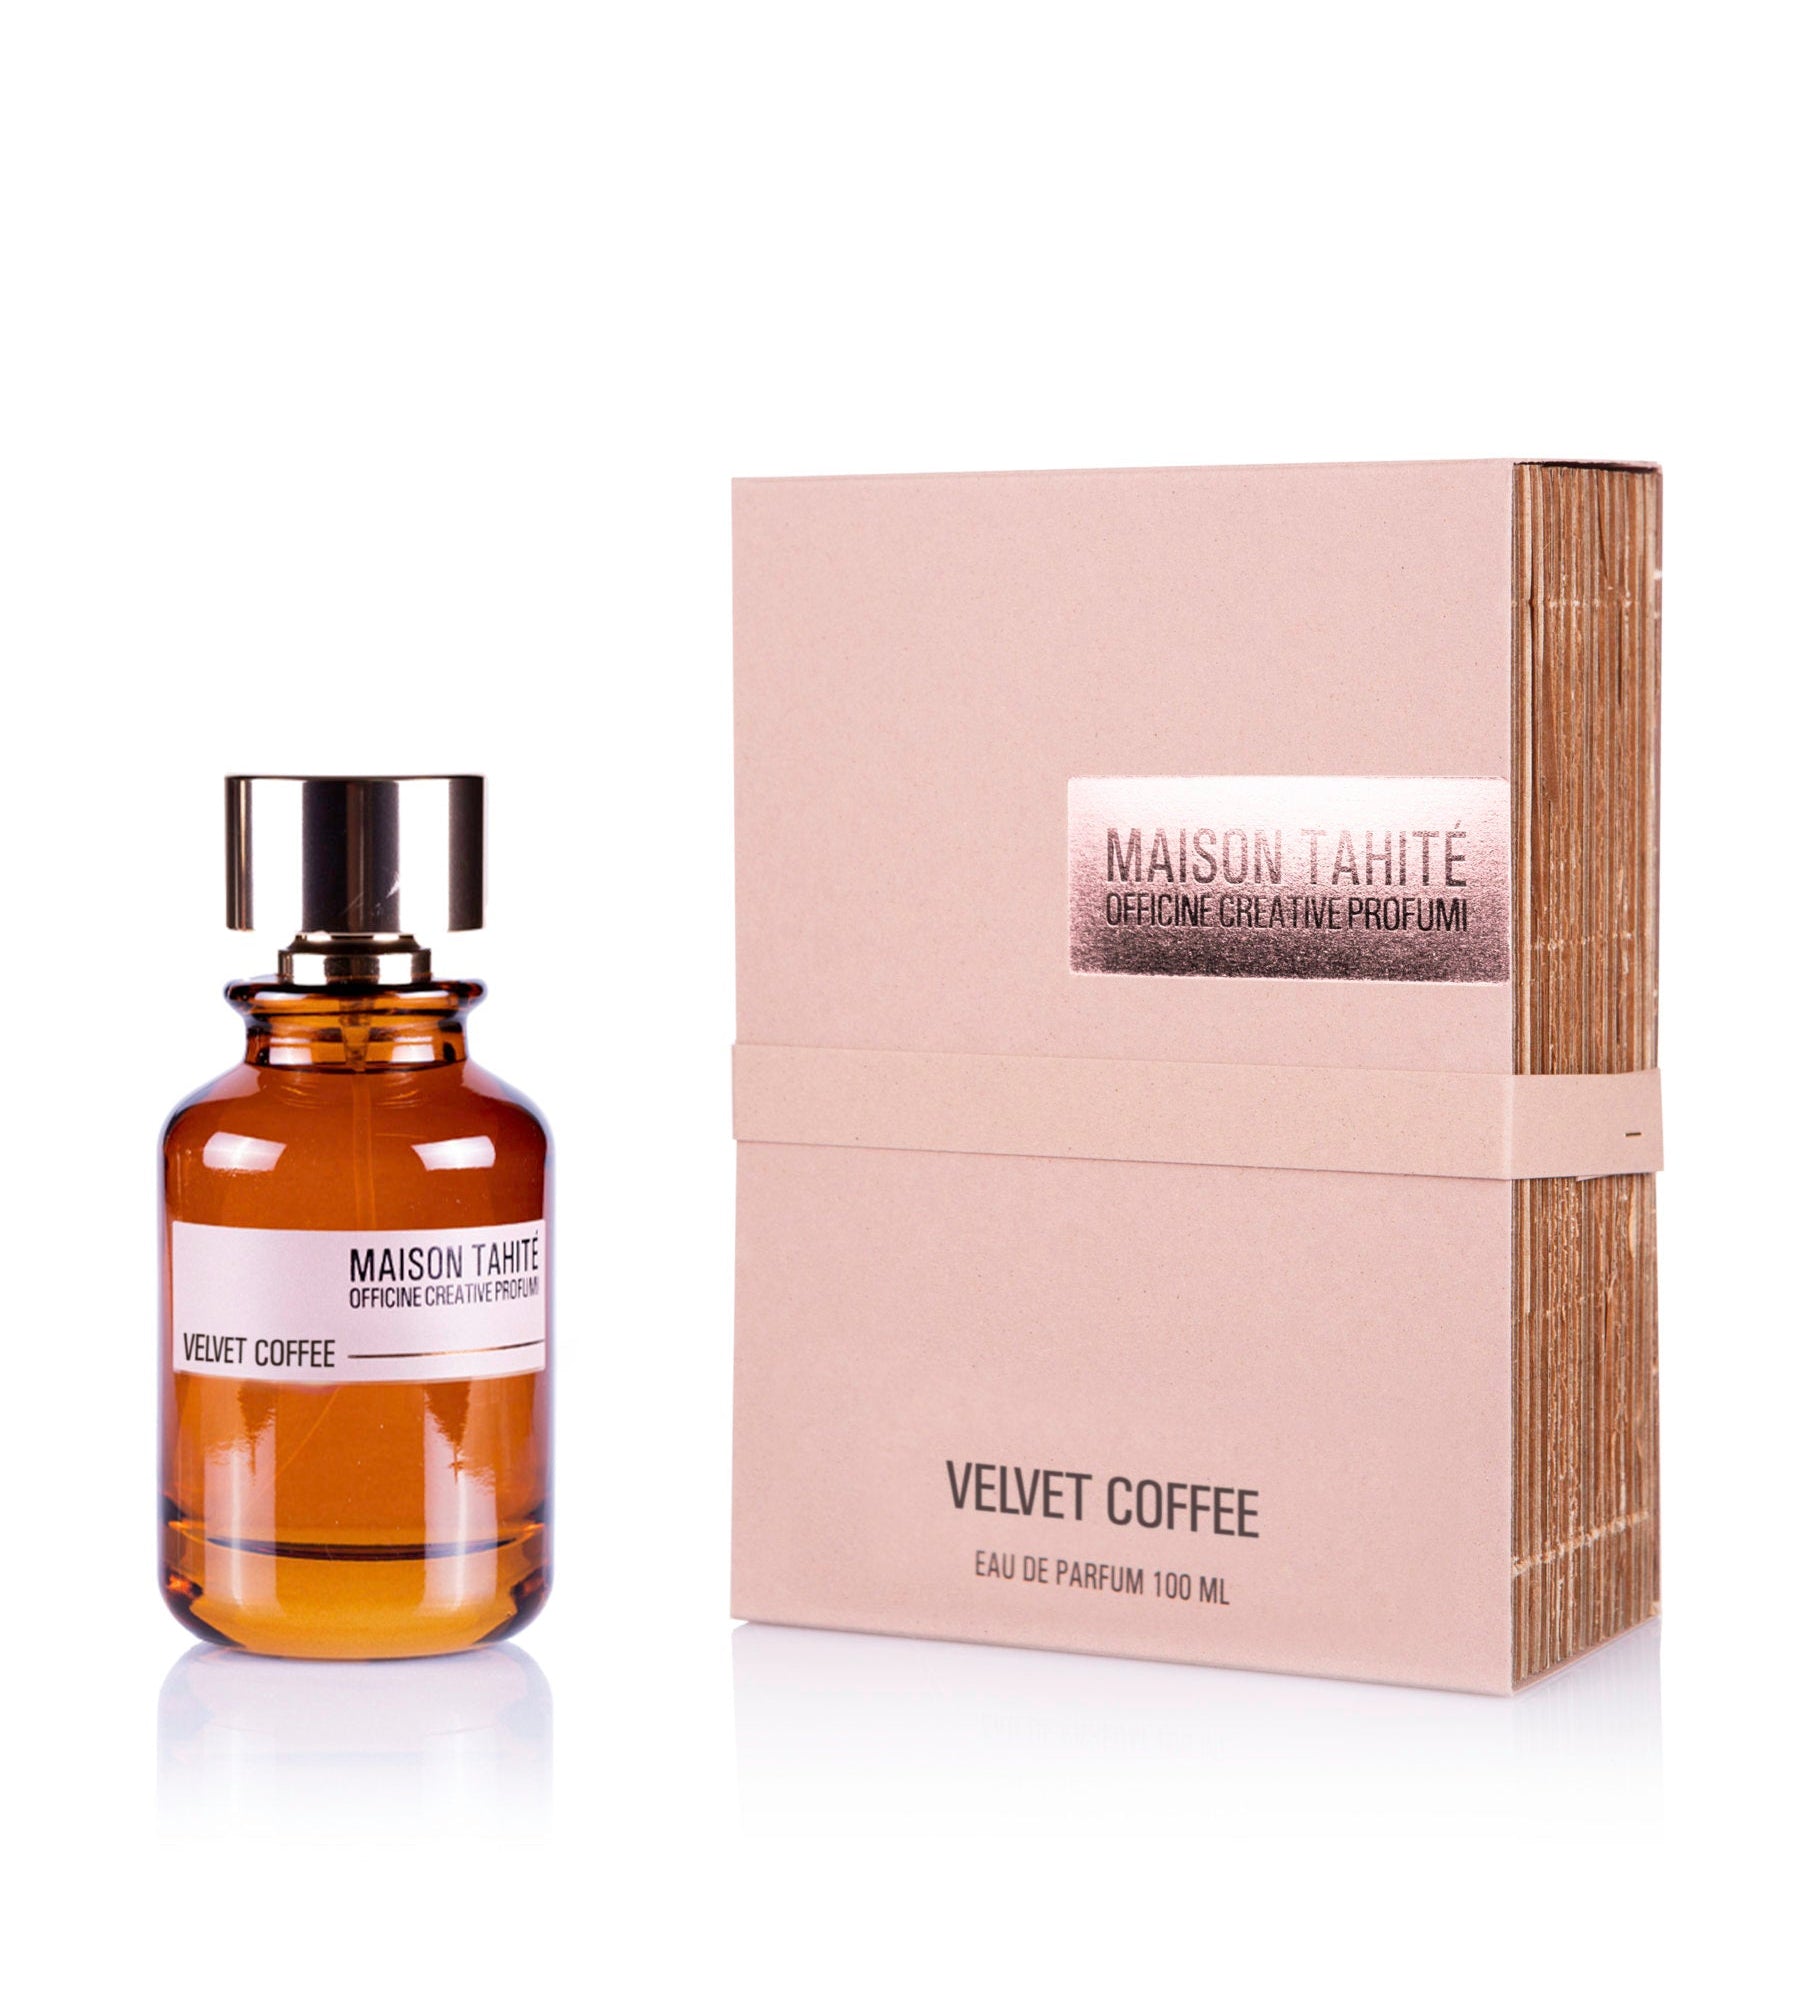 Velvet-coffee-scatola-bottiglia-copia-scaled.jpg